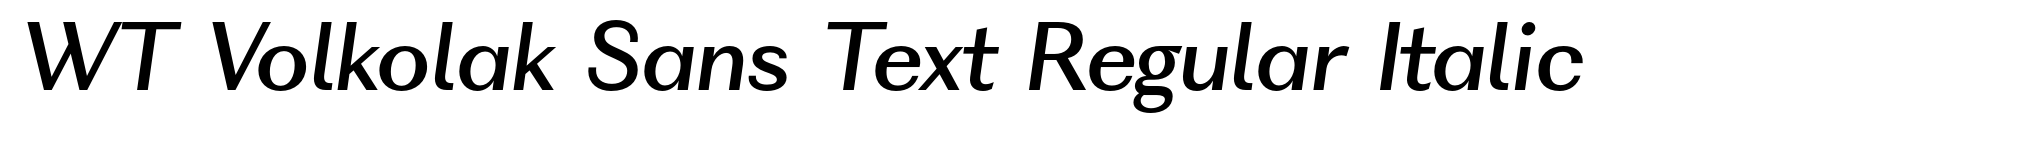 WT Volkolak Sans Text Regular Italic image